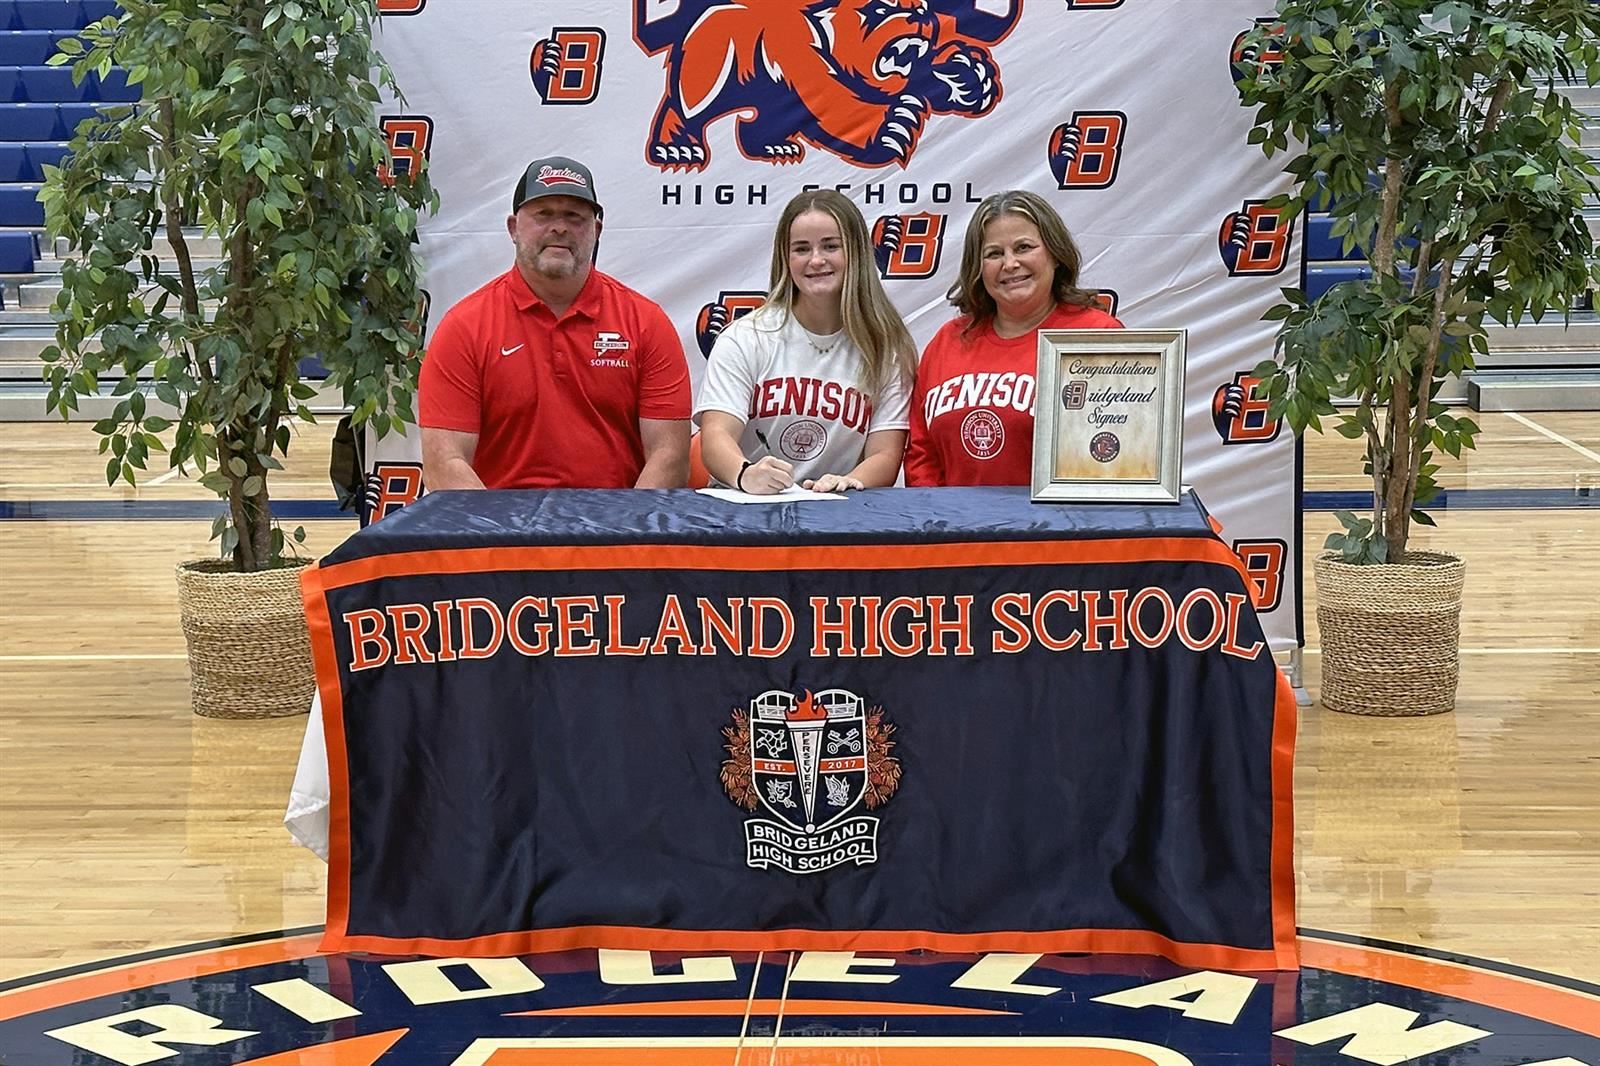 Bridgeland High School senior Carley Melton, center, signed her letter of intent to play softball at Denison University.